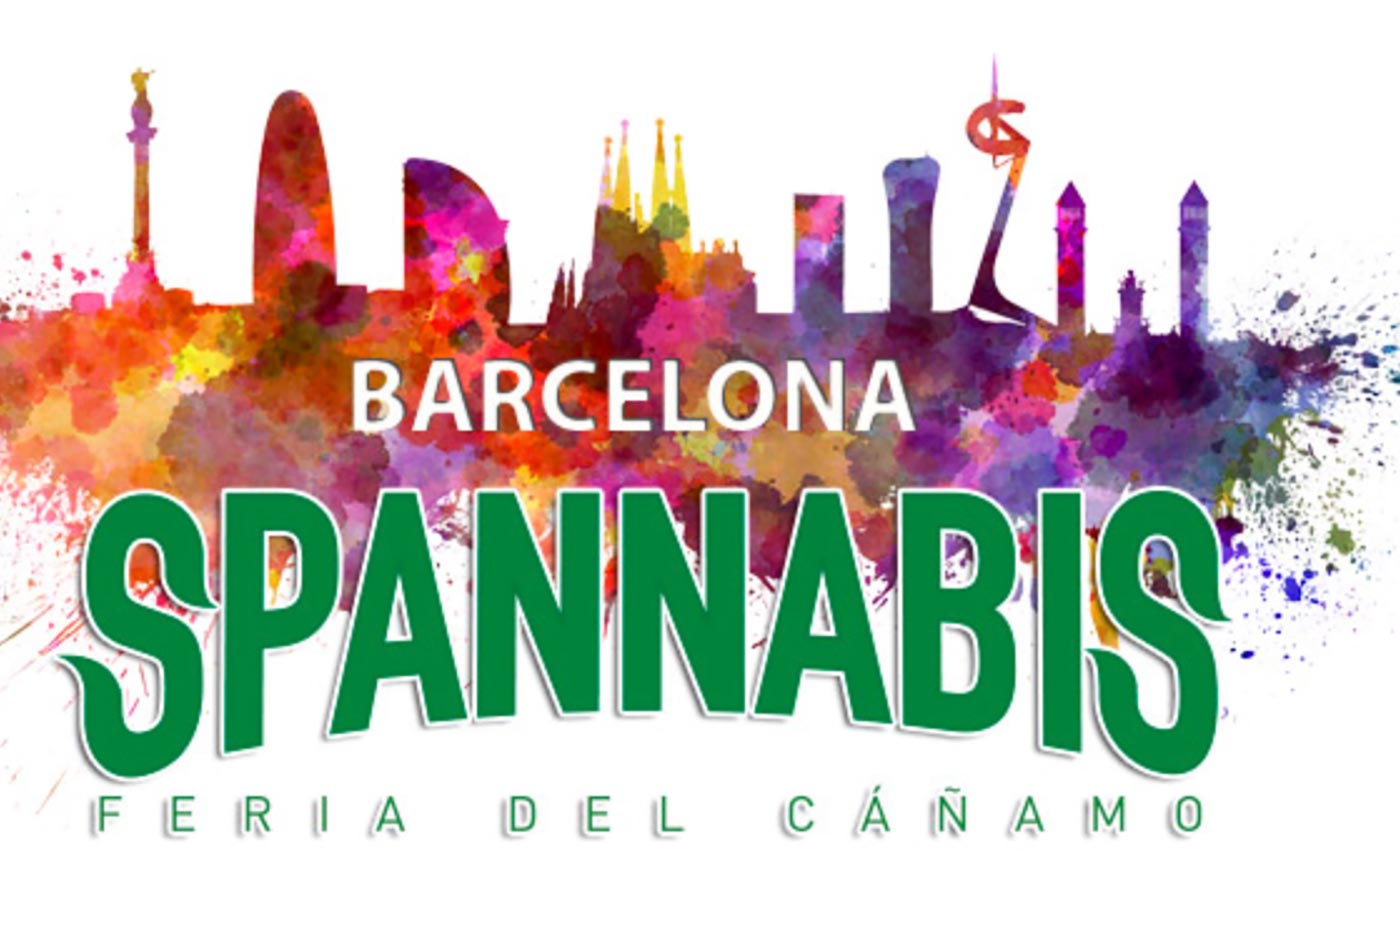 Spannabis 2019, la XVI Feria del cáñamo vuelve a Barcelona